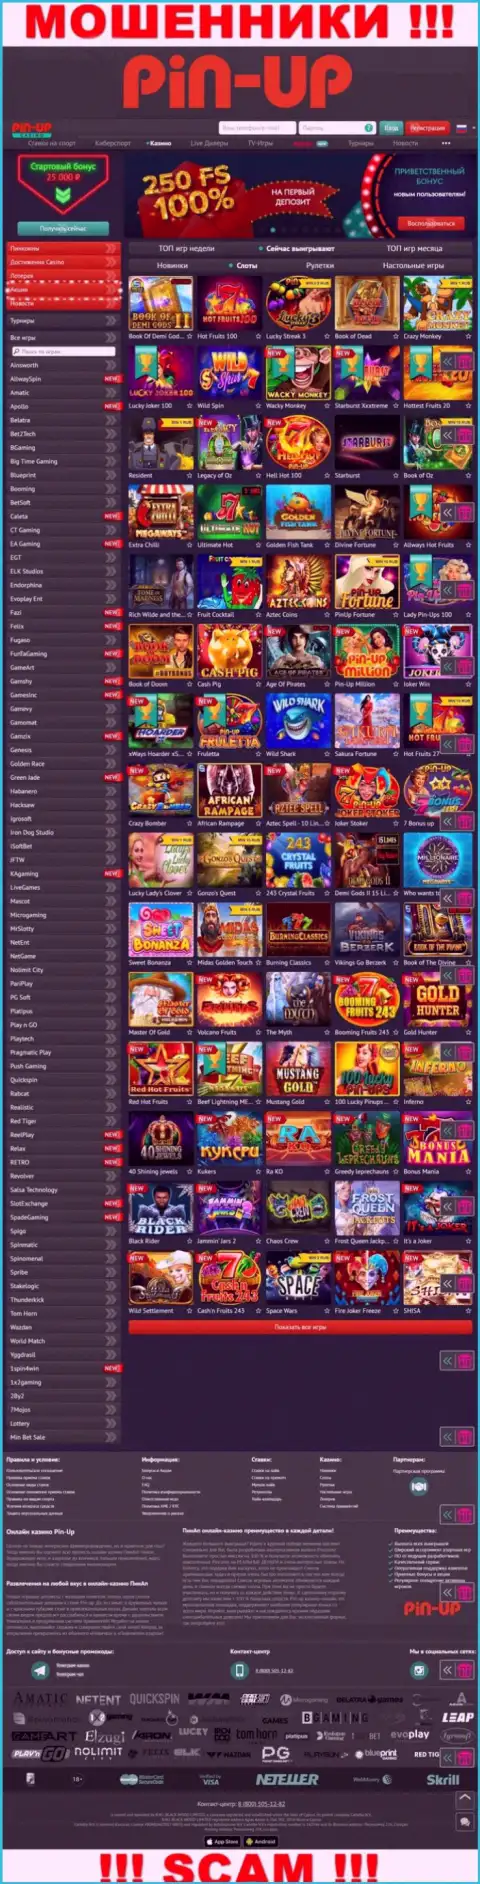 Pin-Up Casino - это официальный сайт шулеров Pin-Up Casino